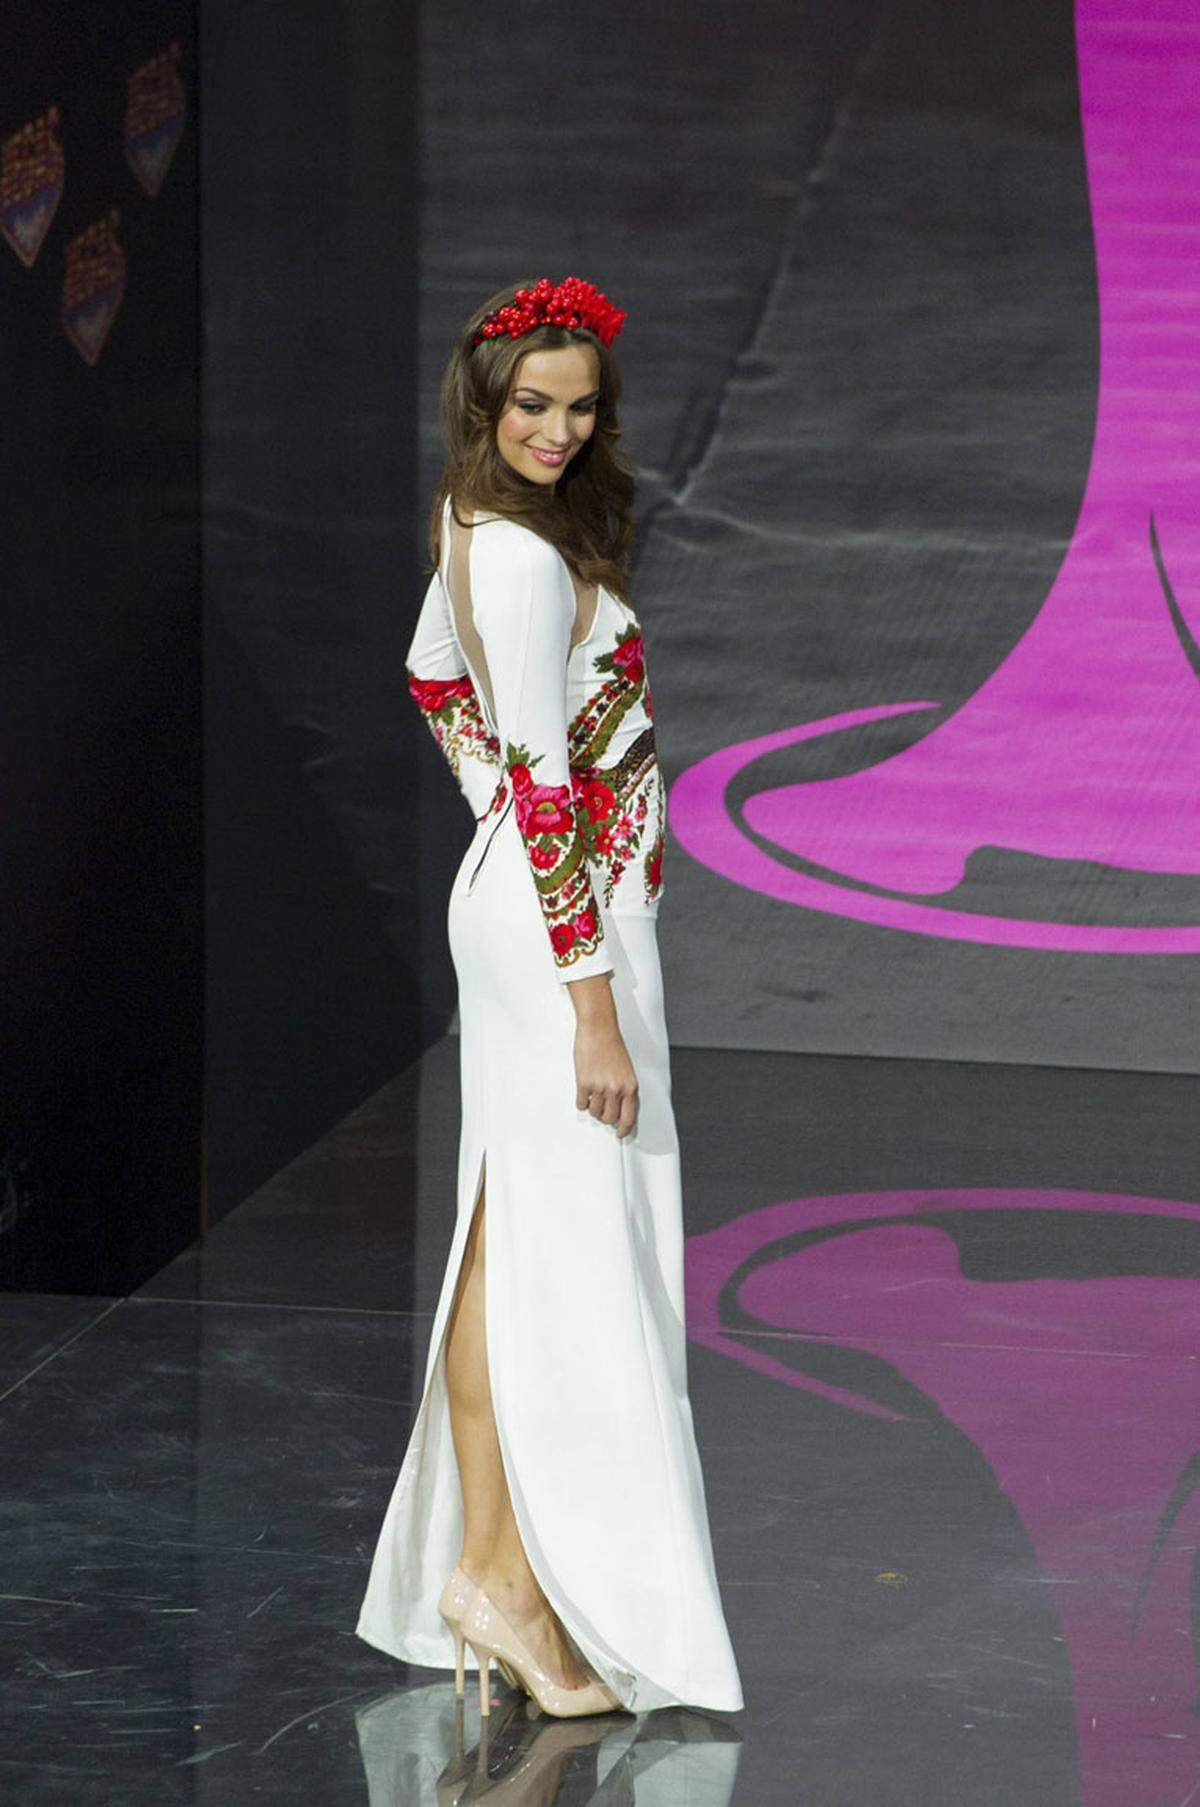 Paulina Krupinska, Miss Poland 2013.